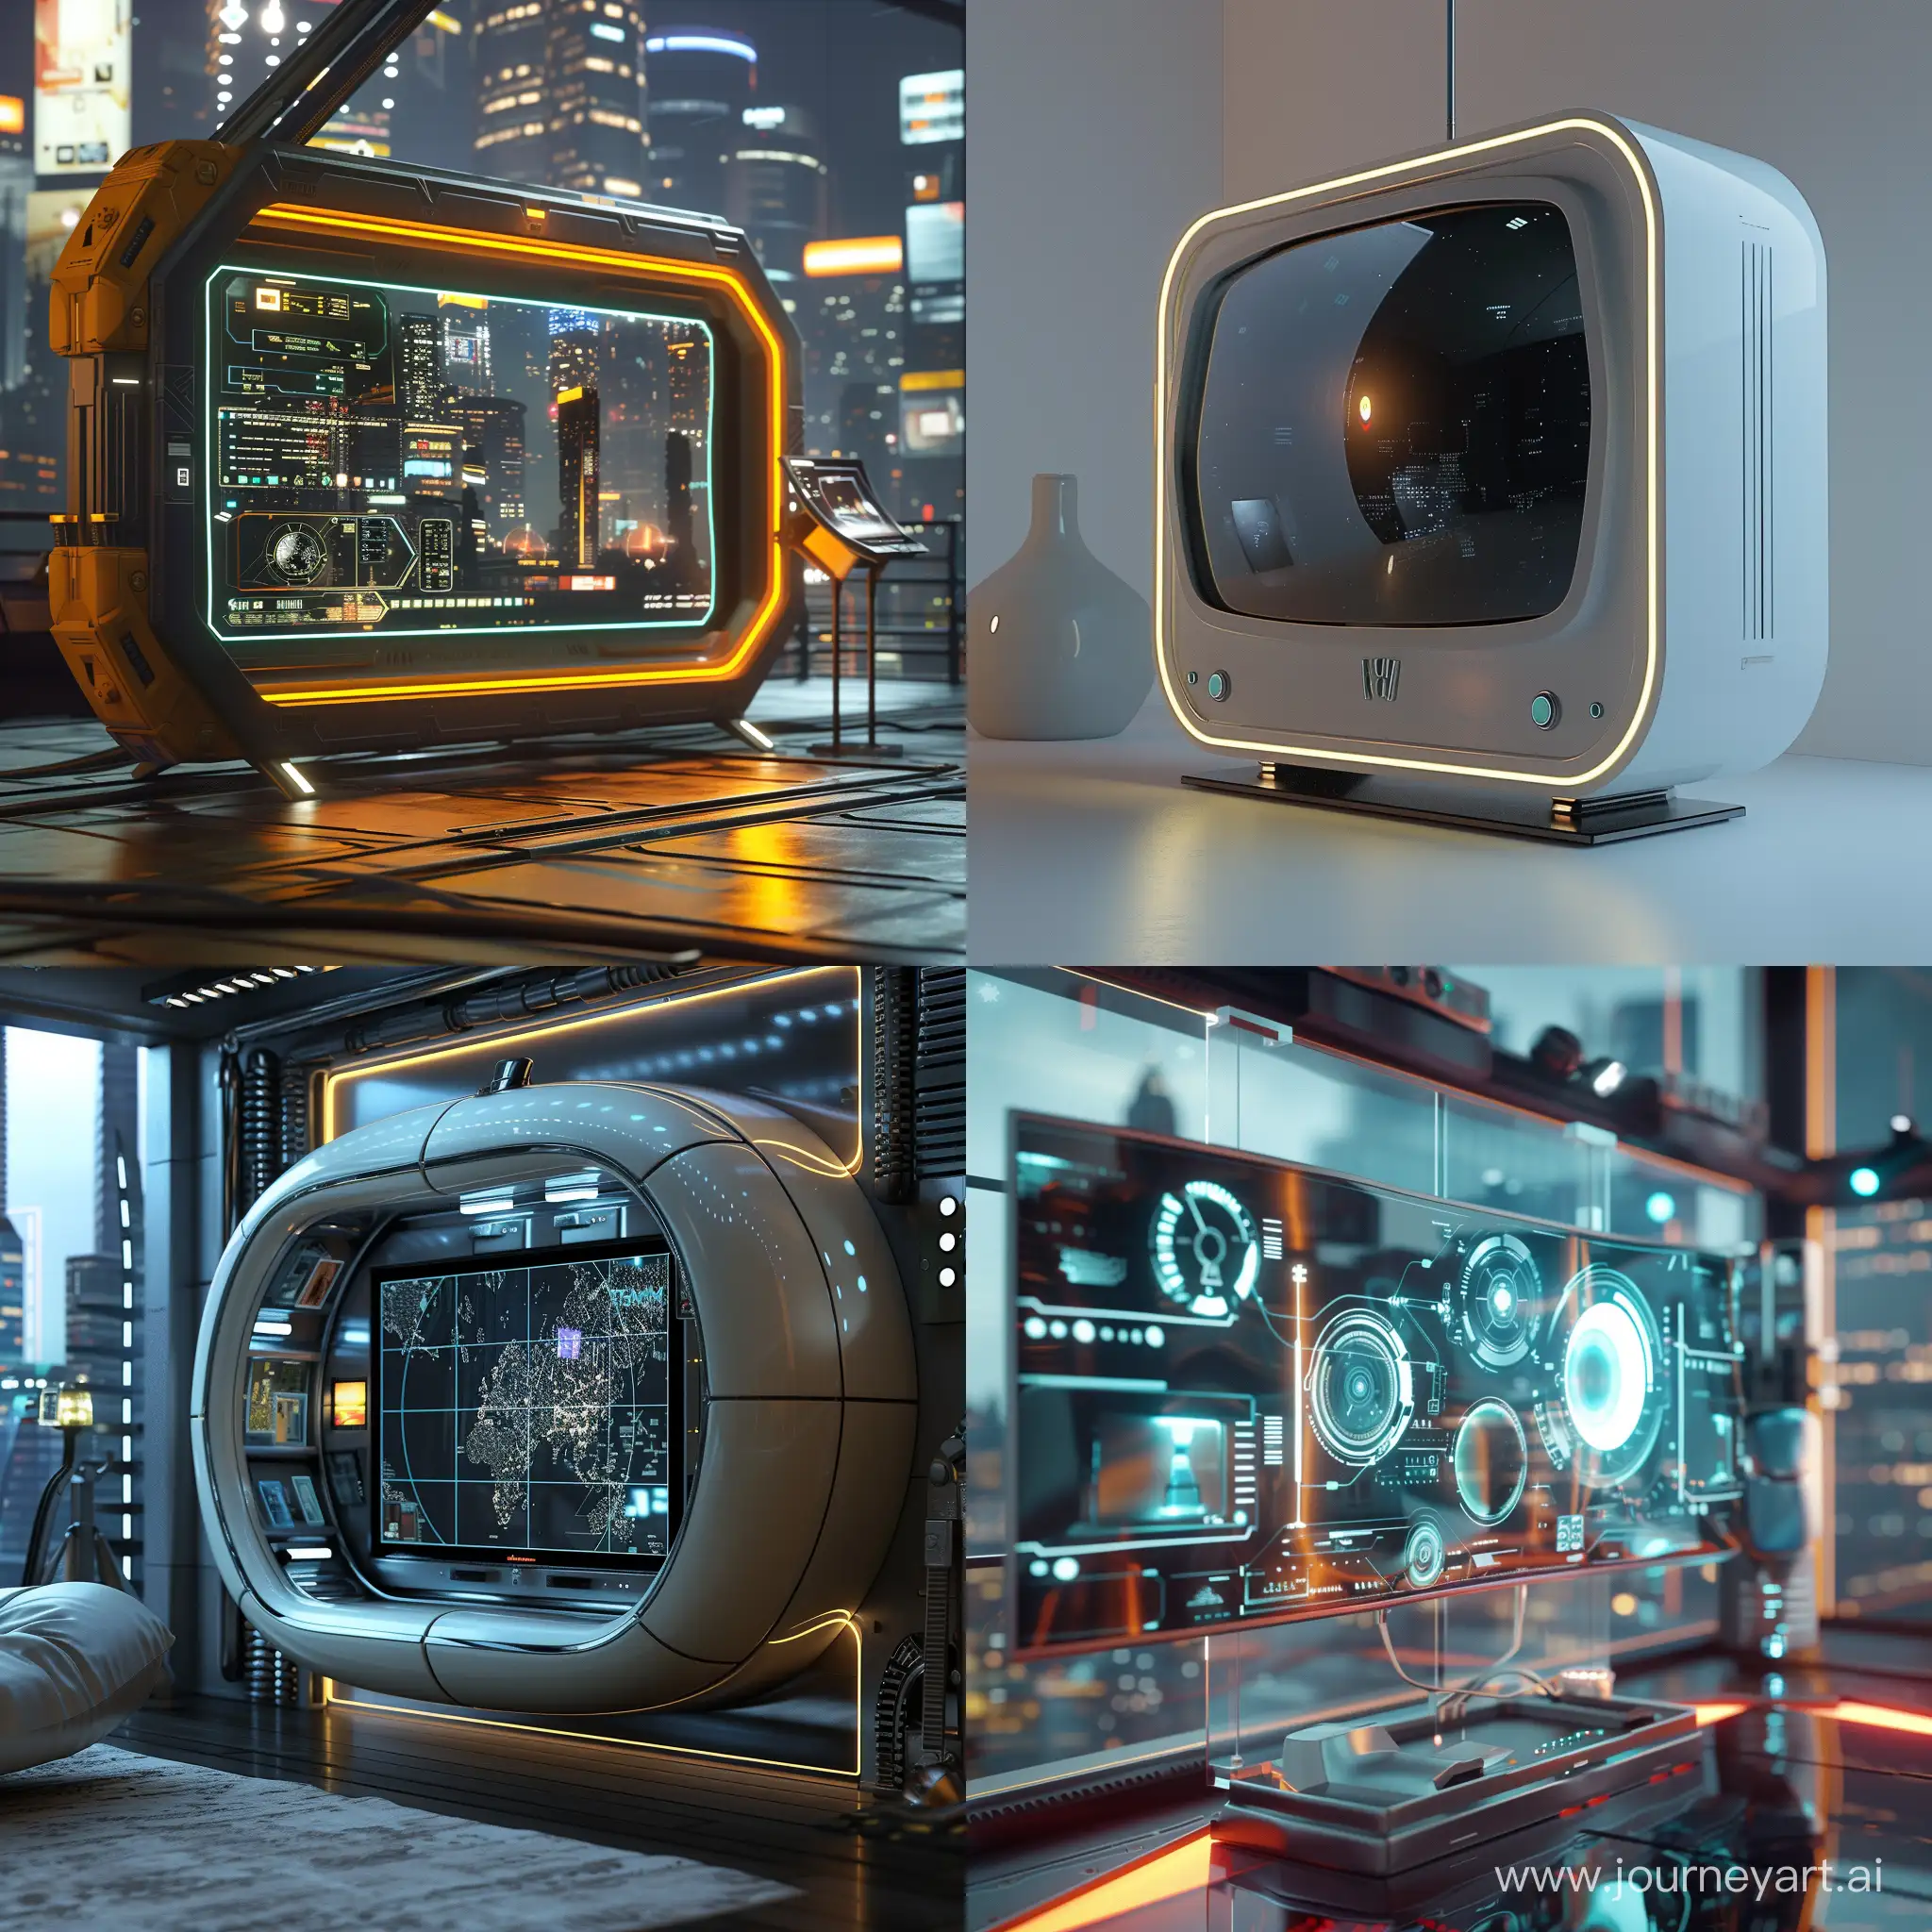 Futuristic-TV-in-HighTech-World-Dynamic-Octane-Render